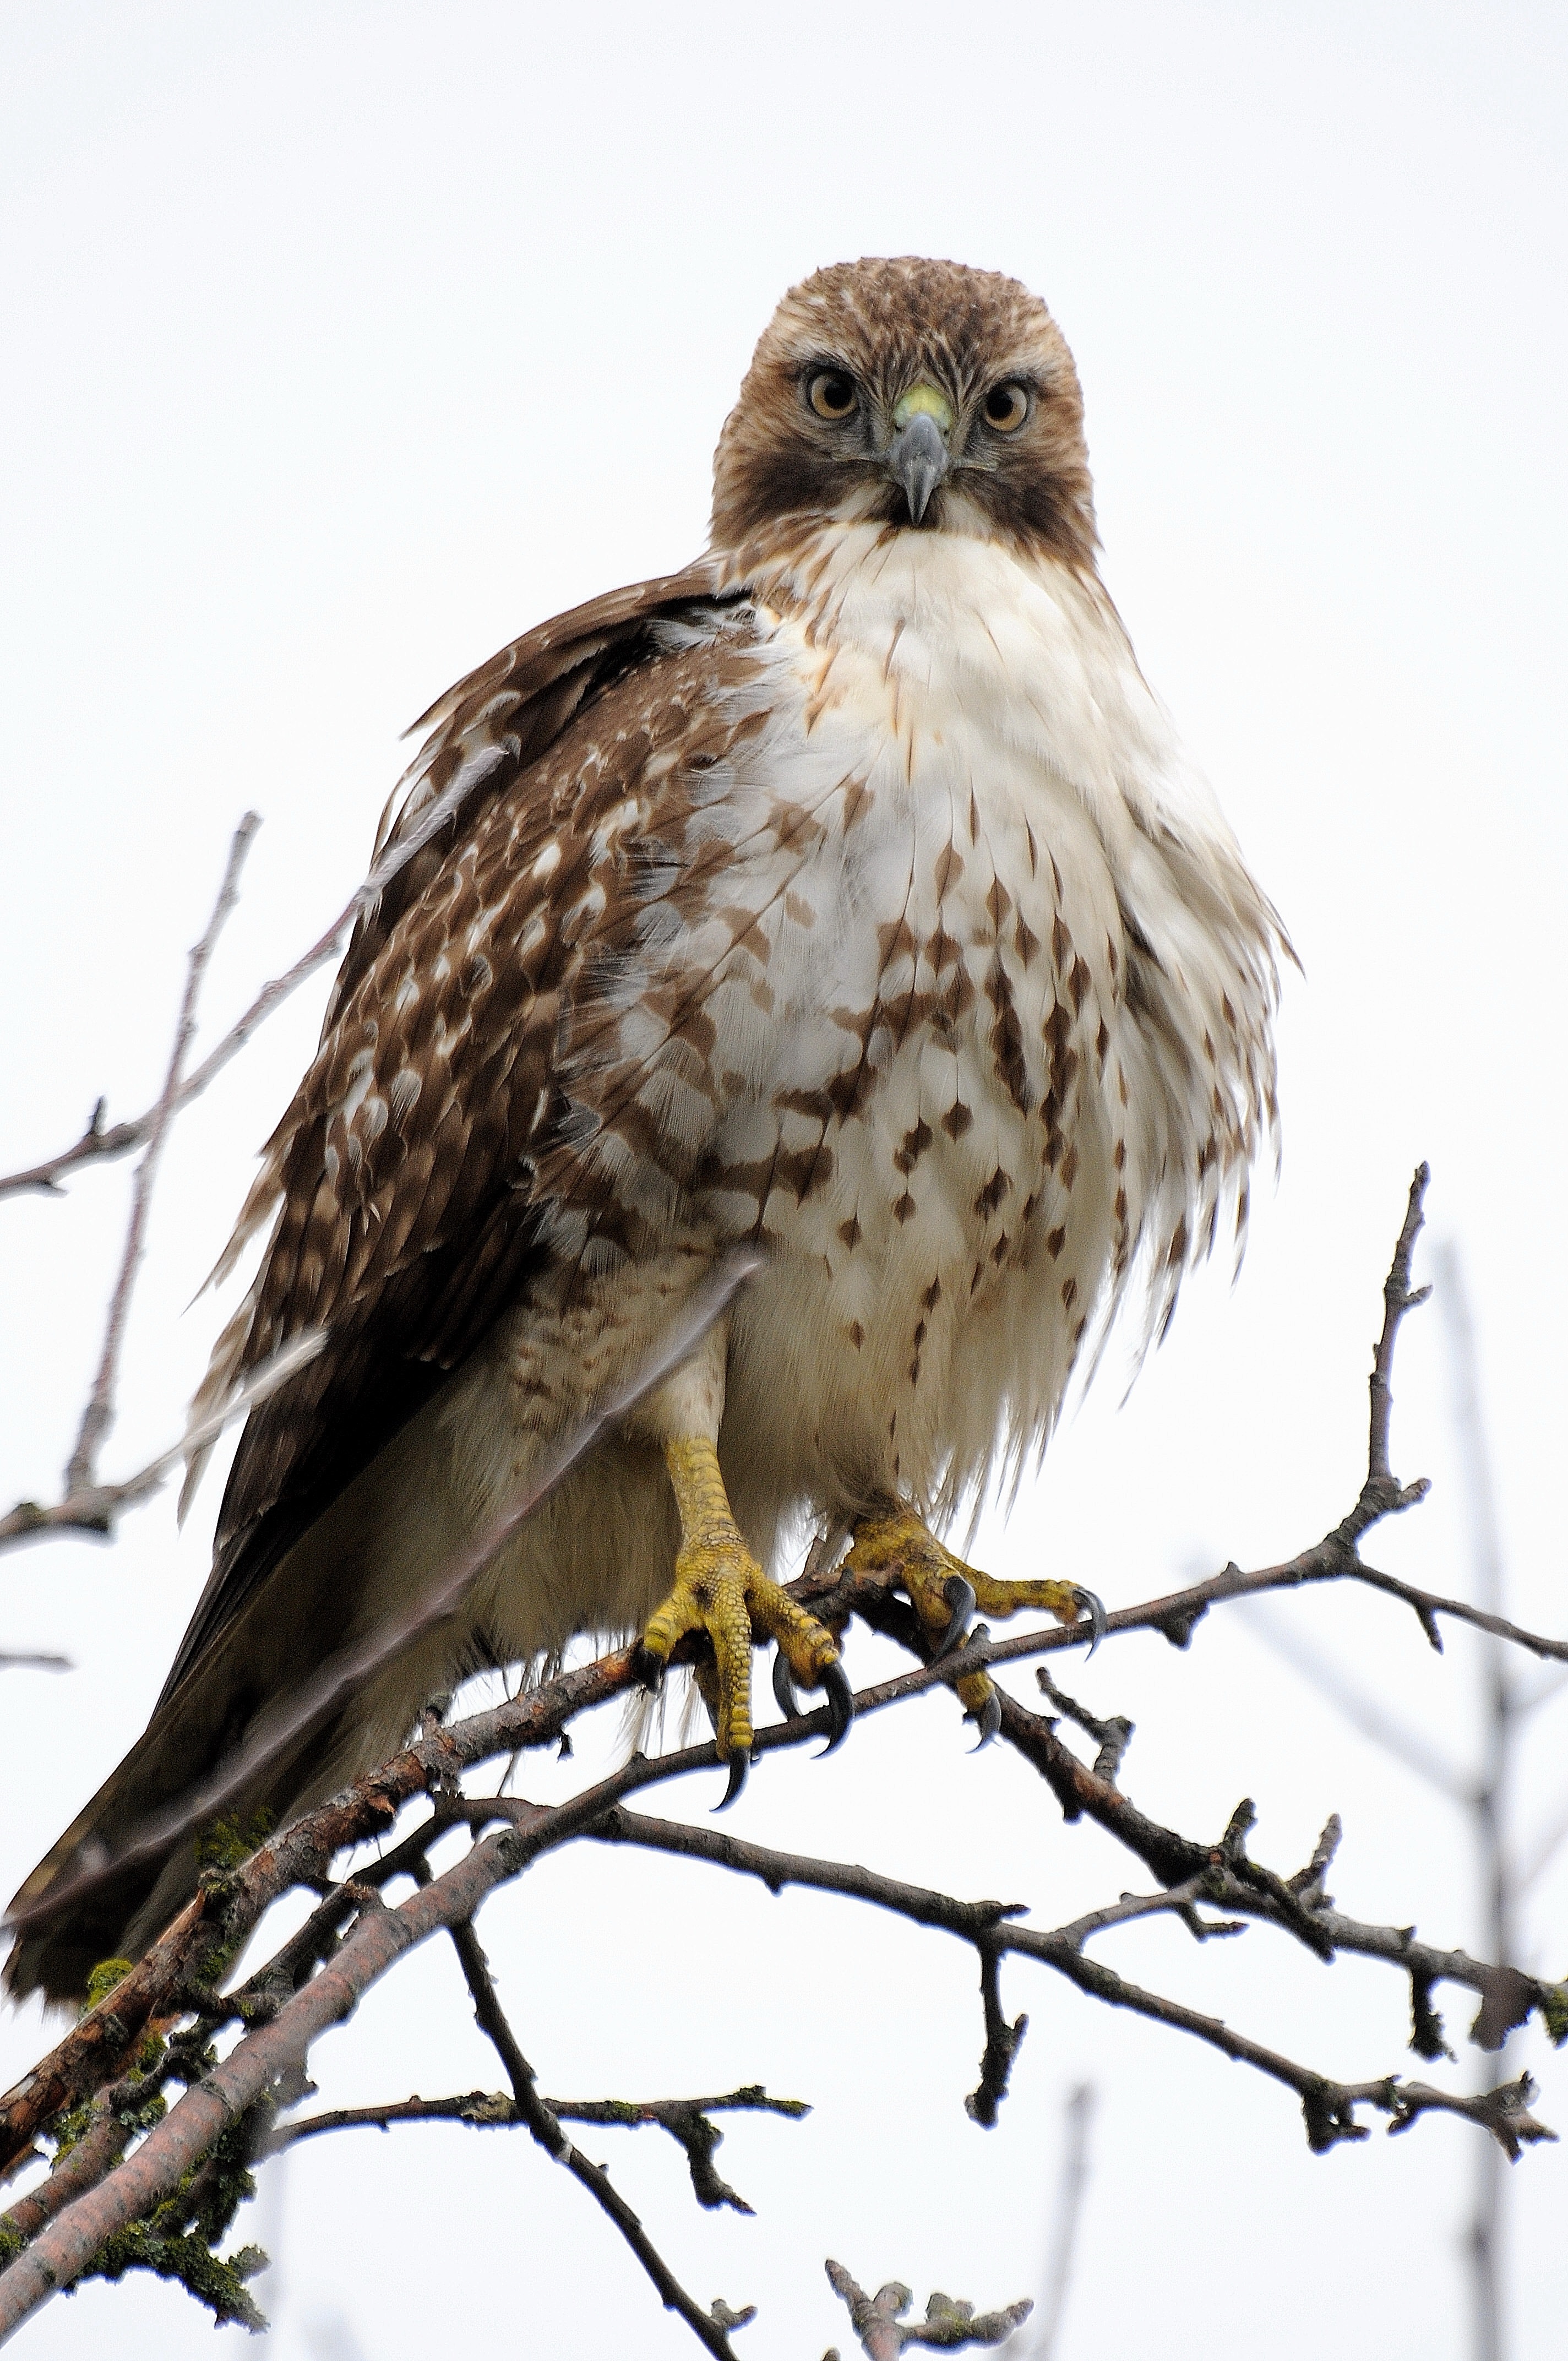 Red-tailed hawk photo: Joe Meche